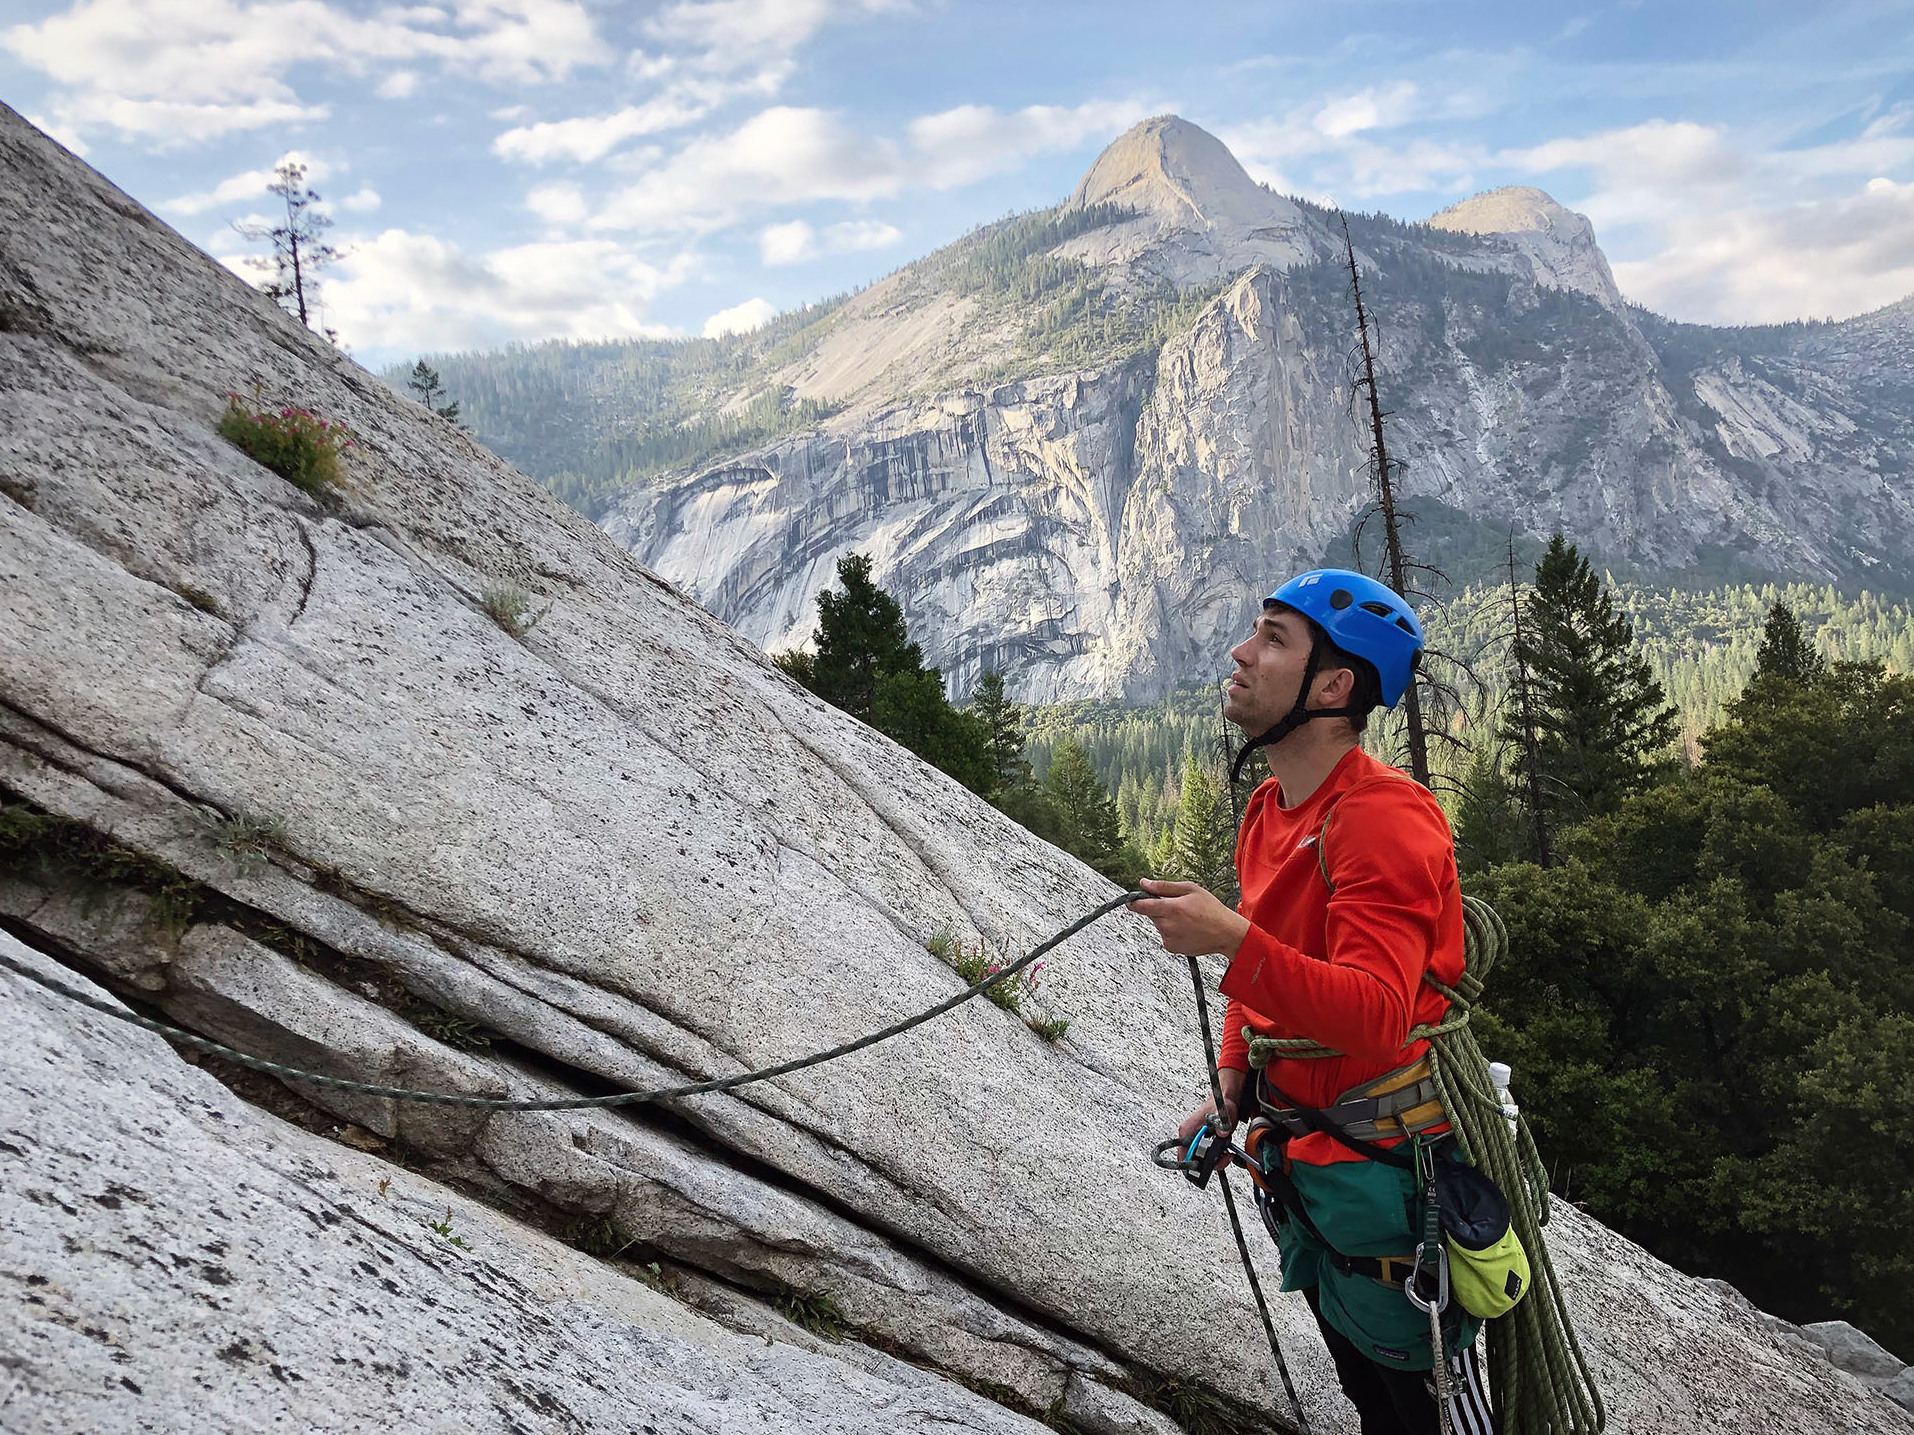 Yosemite Rock climbing